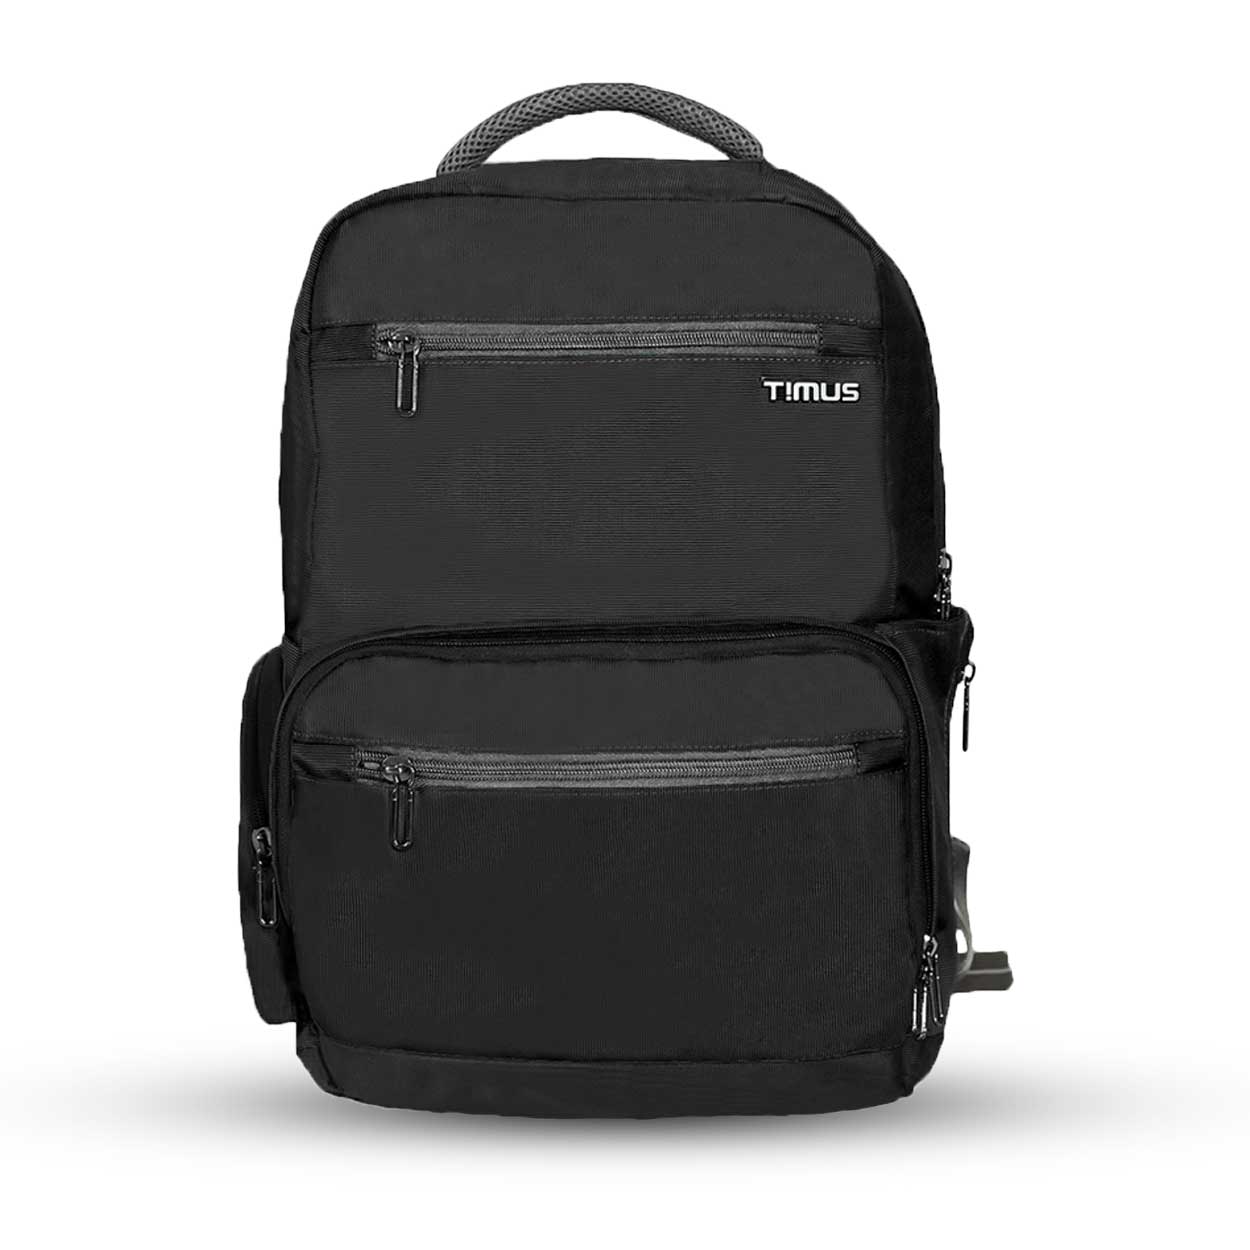 Timus-Lifestyle-backpacks-casual-backpacks-Canada-Casual-Backpack-black-1